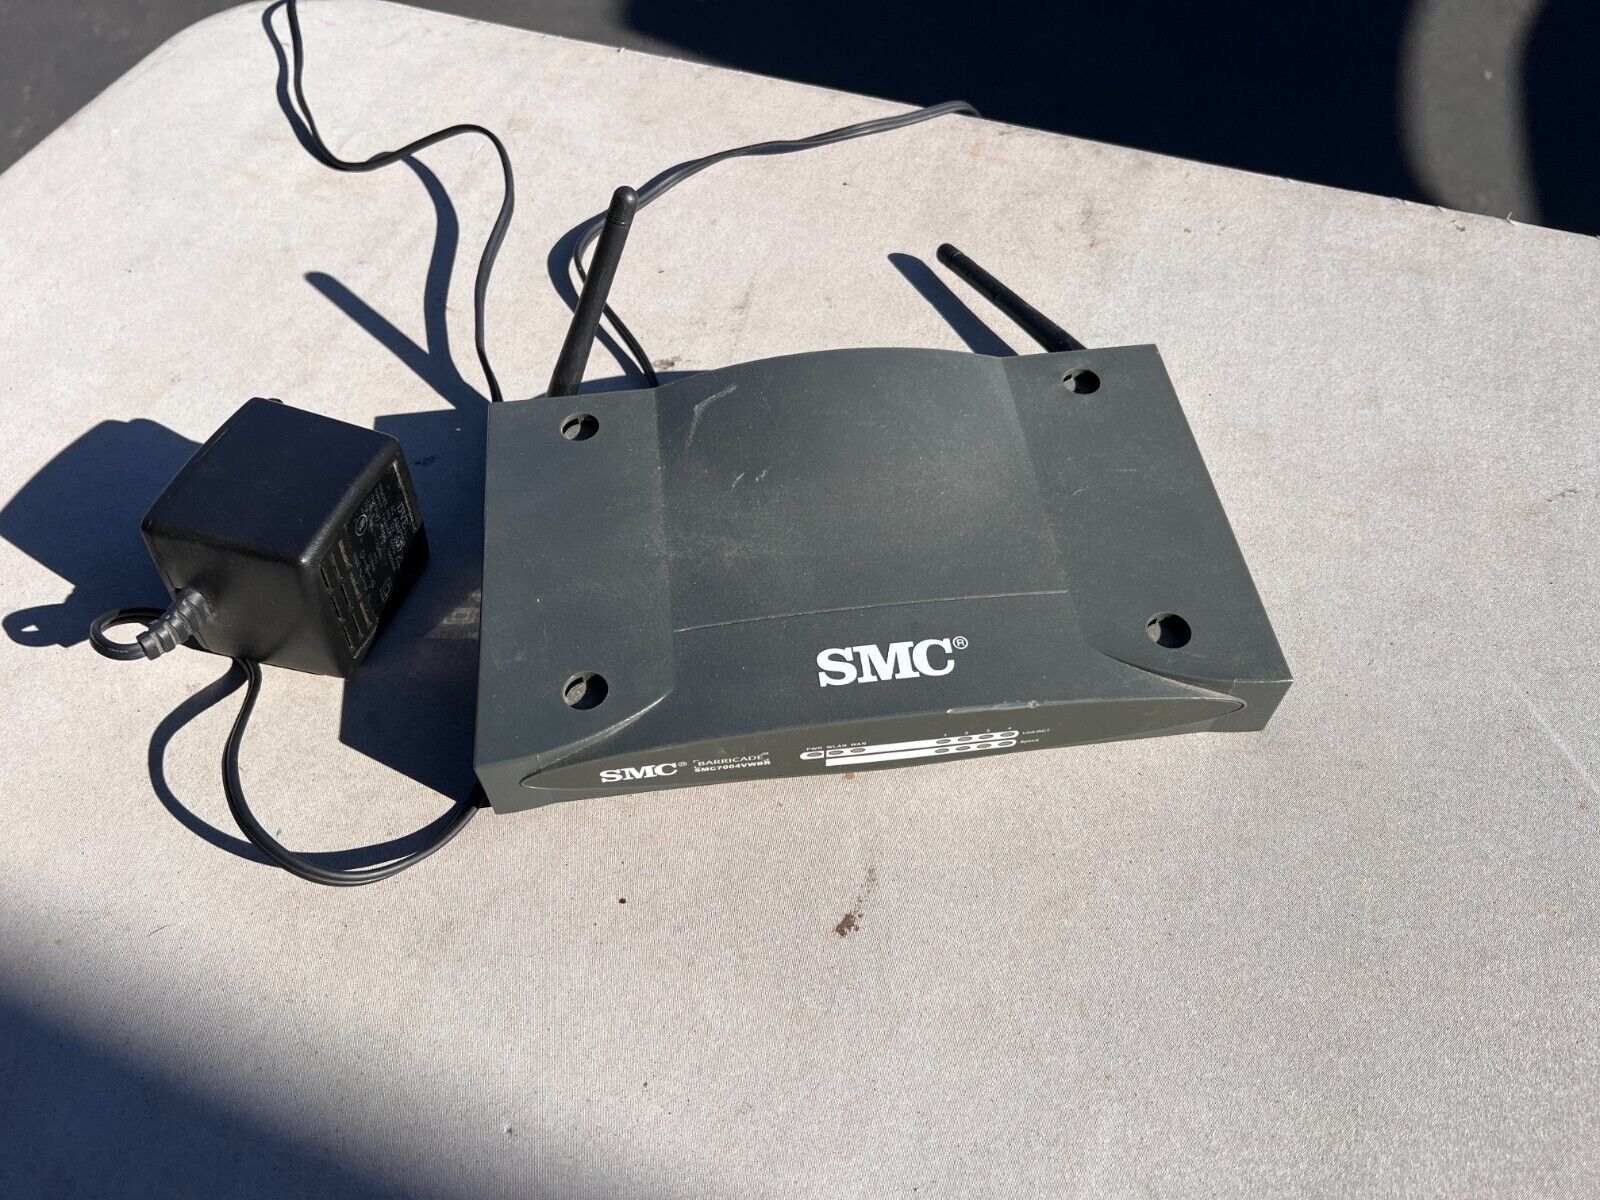 SMC Barricade Cable/DSL Router 4-Port Switch Firewall SMC7004VWBR